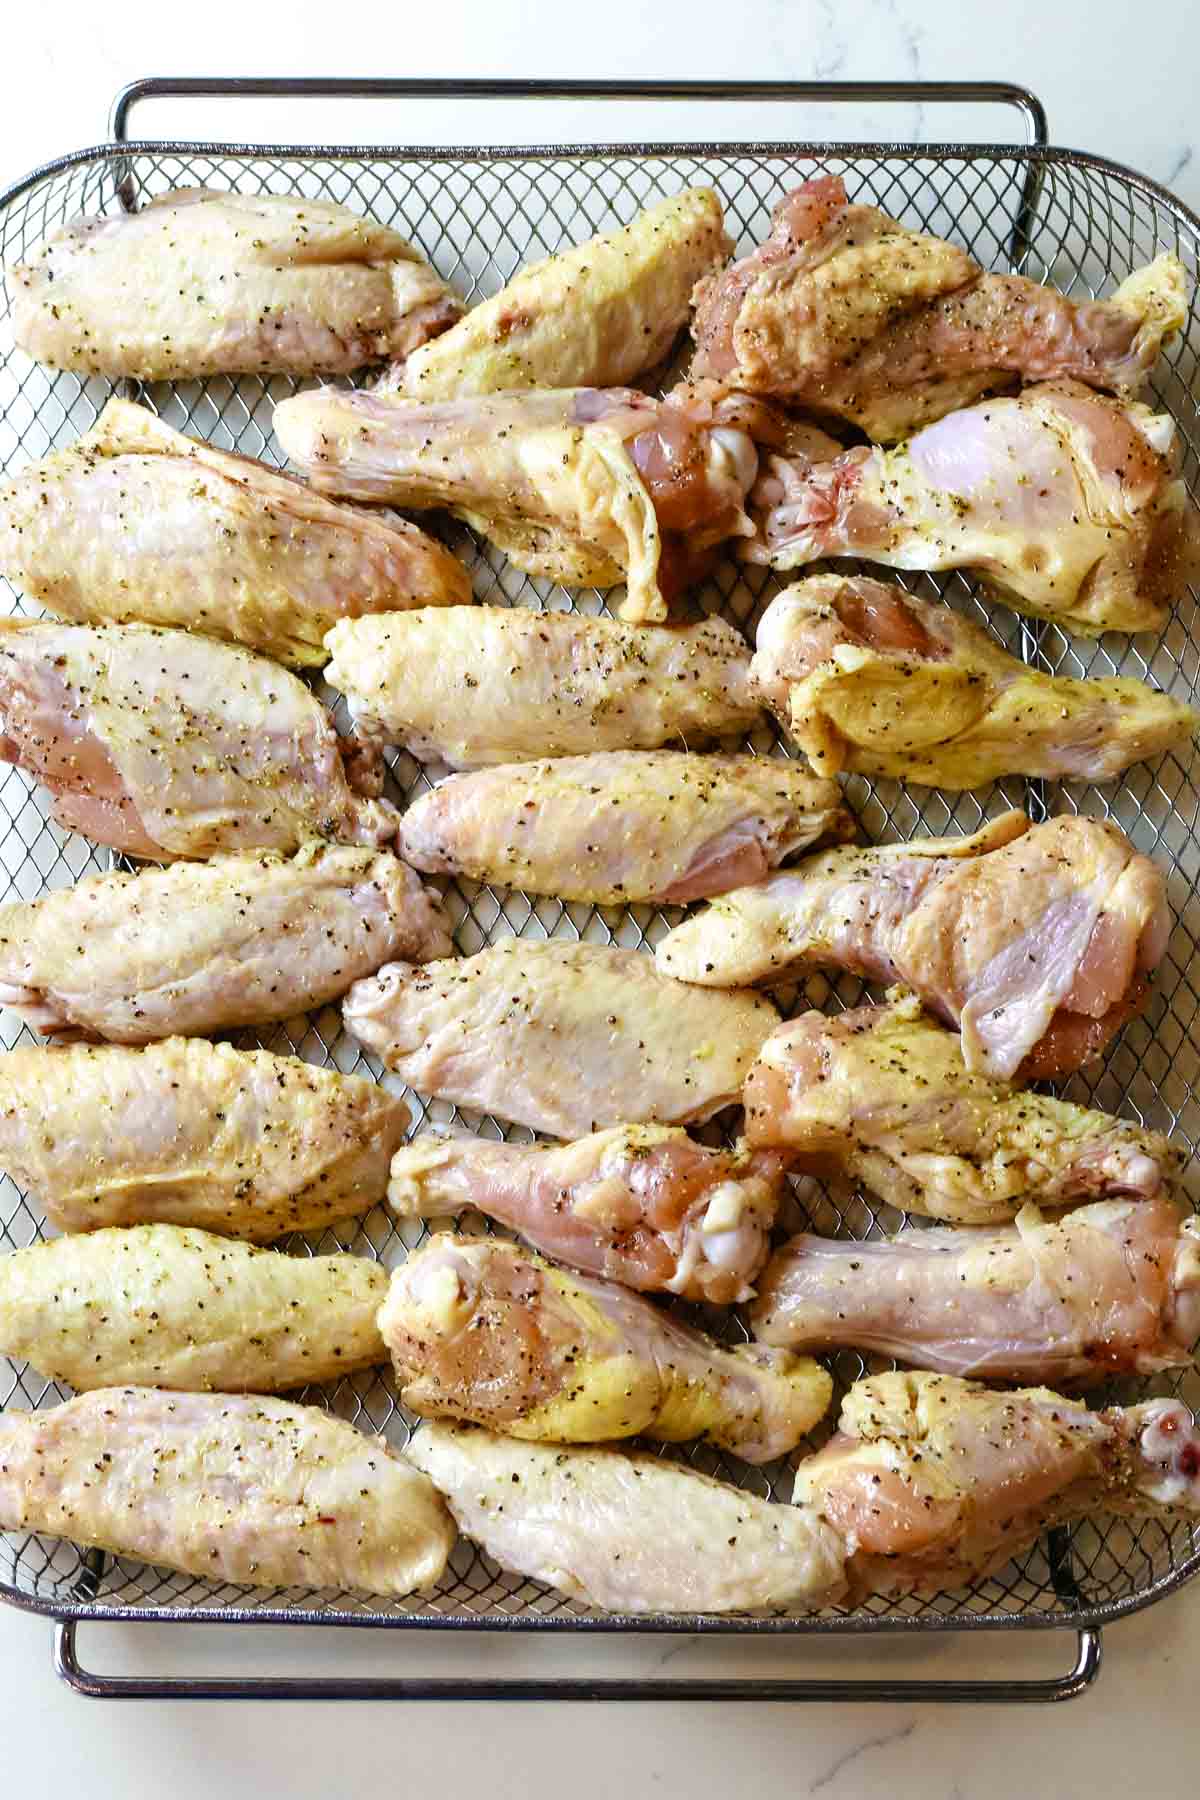 chicken wings spread out in single layer on crisper tray.